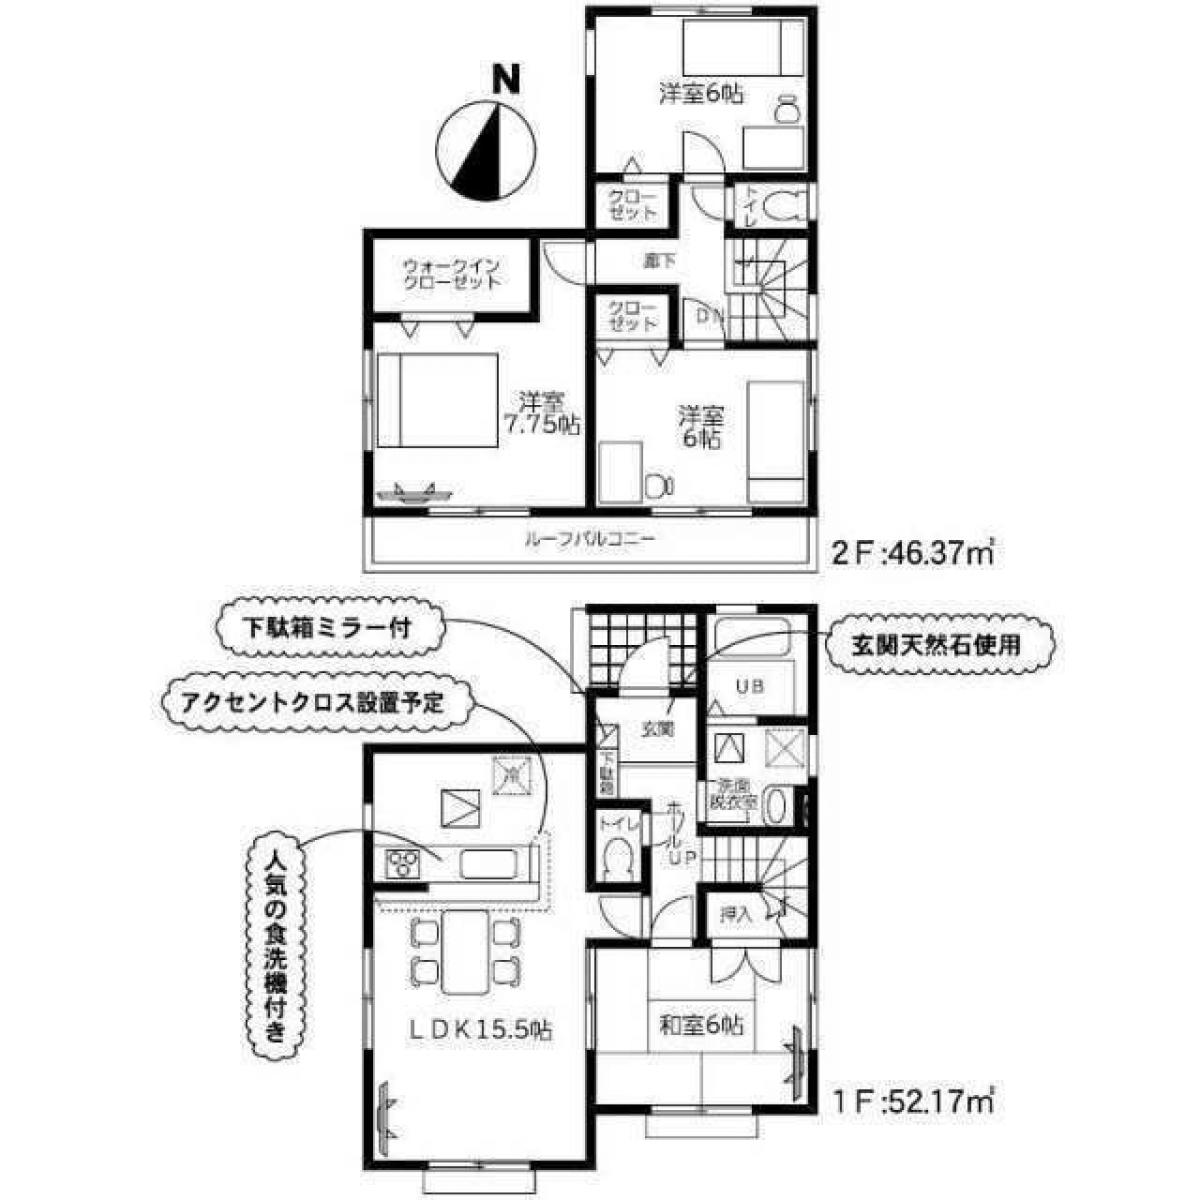 Picture of Home For Sale in Misato Shi, Saitama, Japan